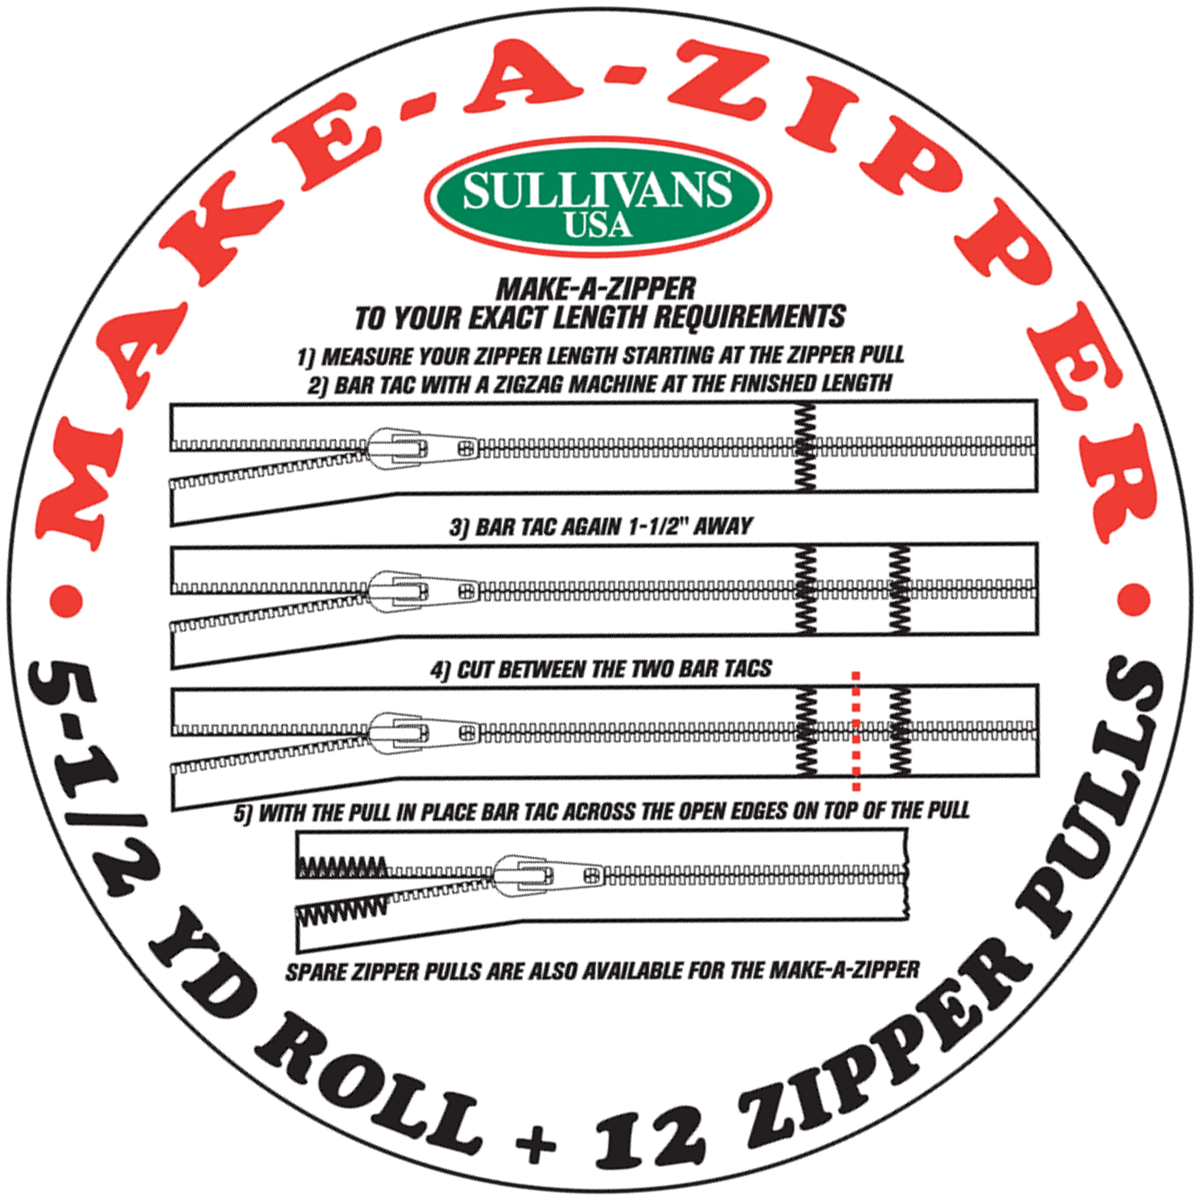 5 Tooth Style Zipper Repair Kit Bulk - Sullivans USA